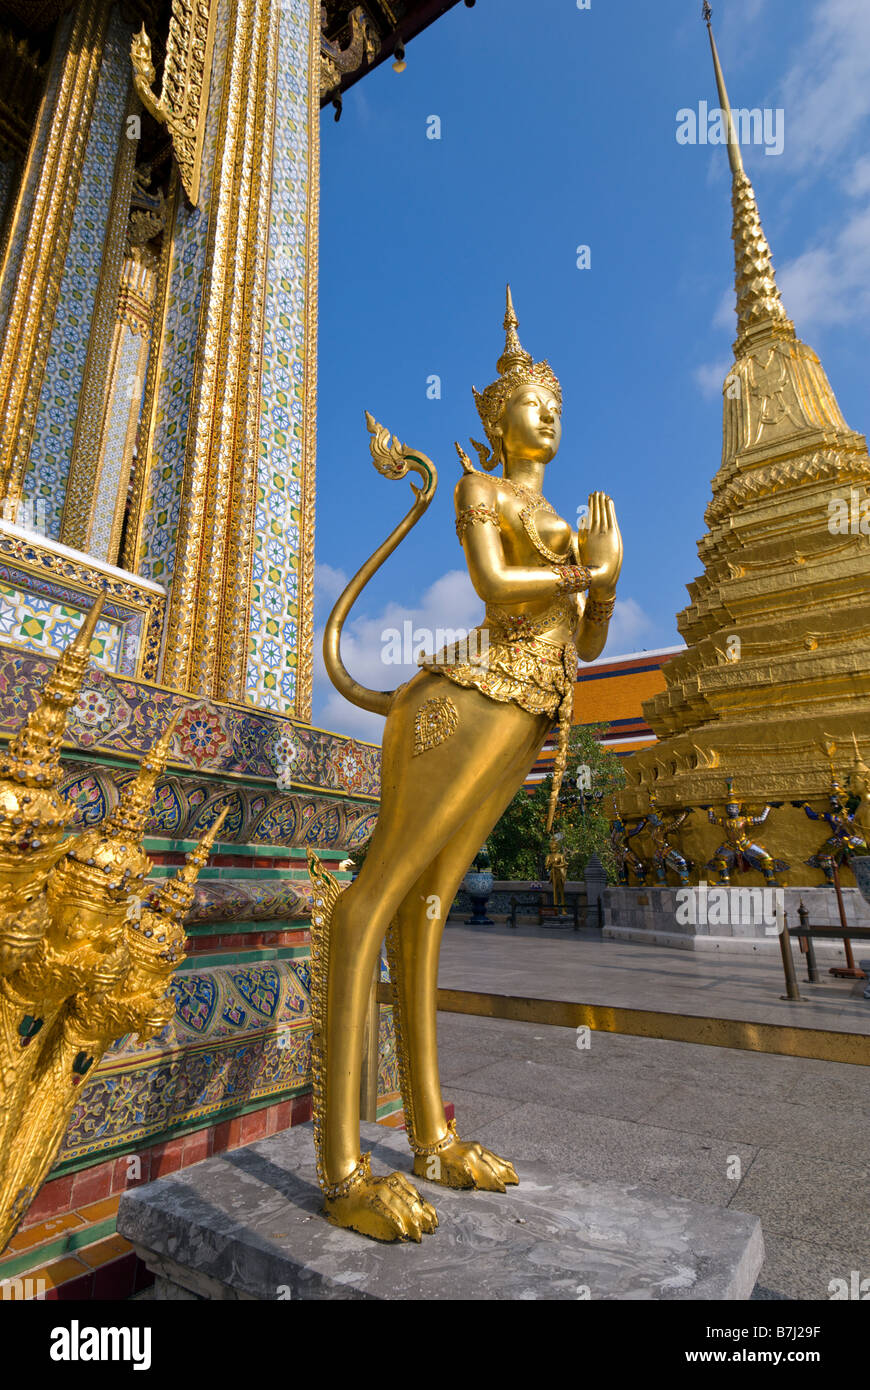 Goldene Statue der Kinnara - Wat Phra Kaew und dem Grand Palace in Bangkok Zentralthailand Stockfoto